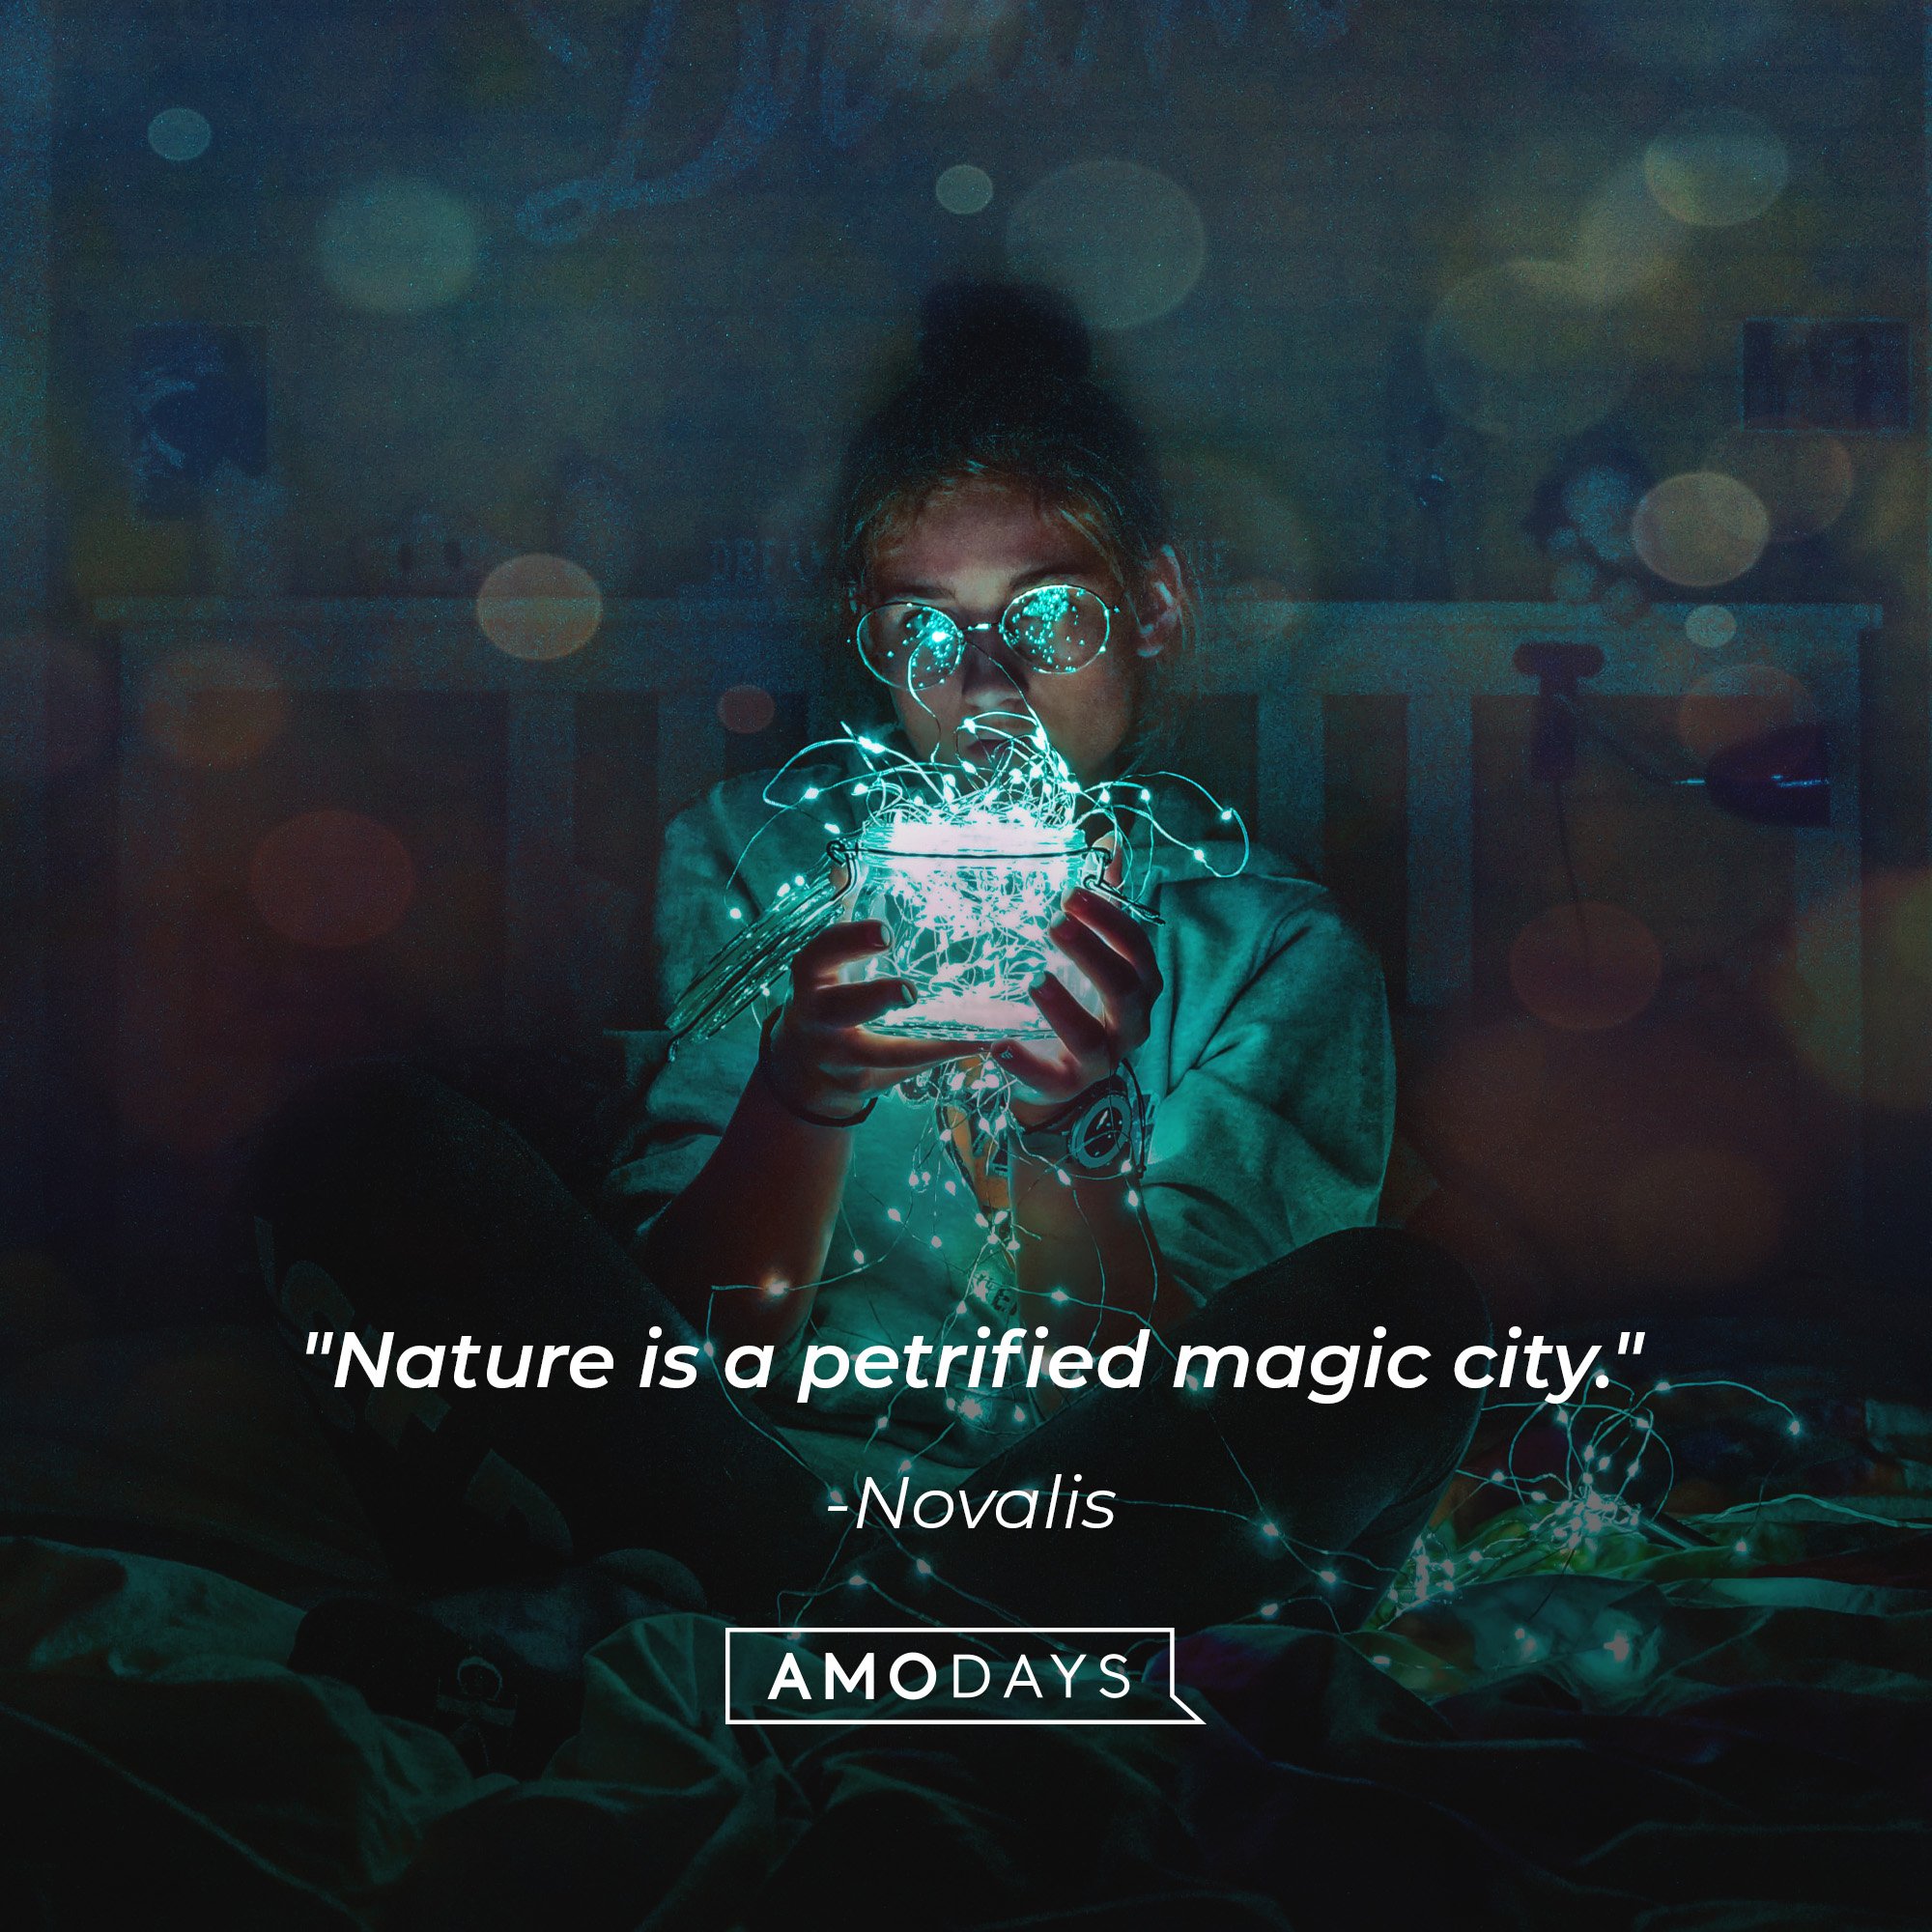 Novalis’ quote: "Nature is a petrified magic city." | Image: AmoDays